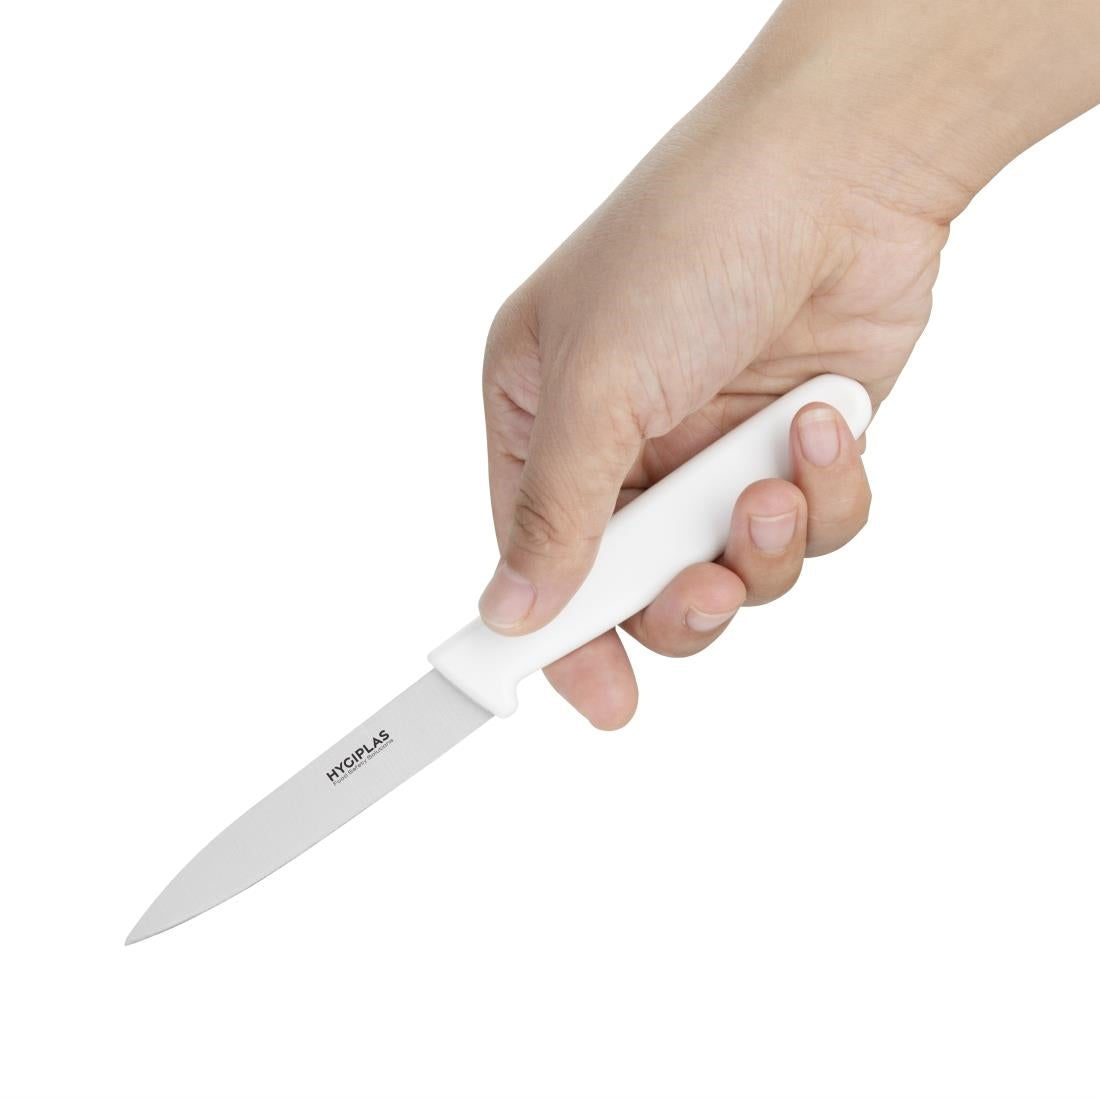 C546 Hygiplas Paring Knife White 7.5cm JD Catering Equipment Solutions Ltd